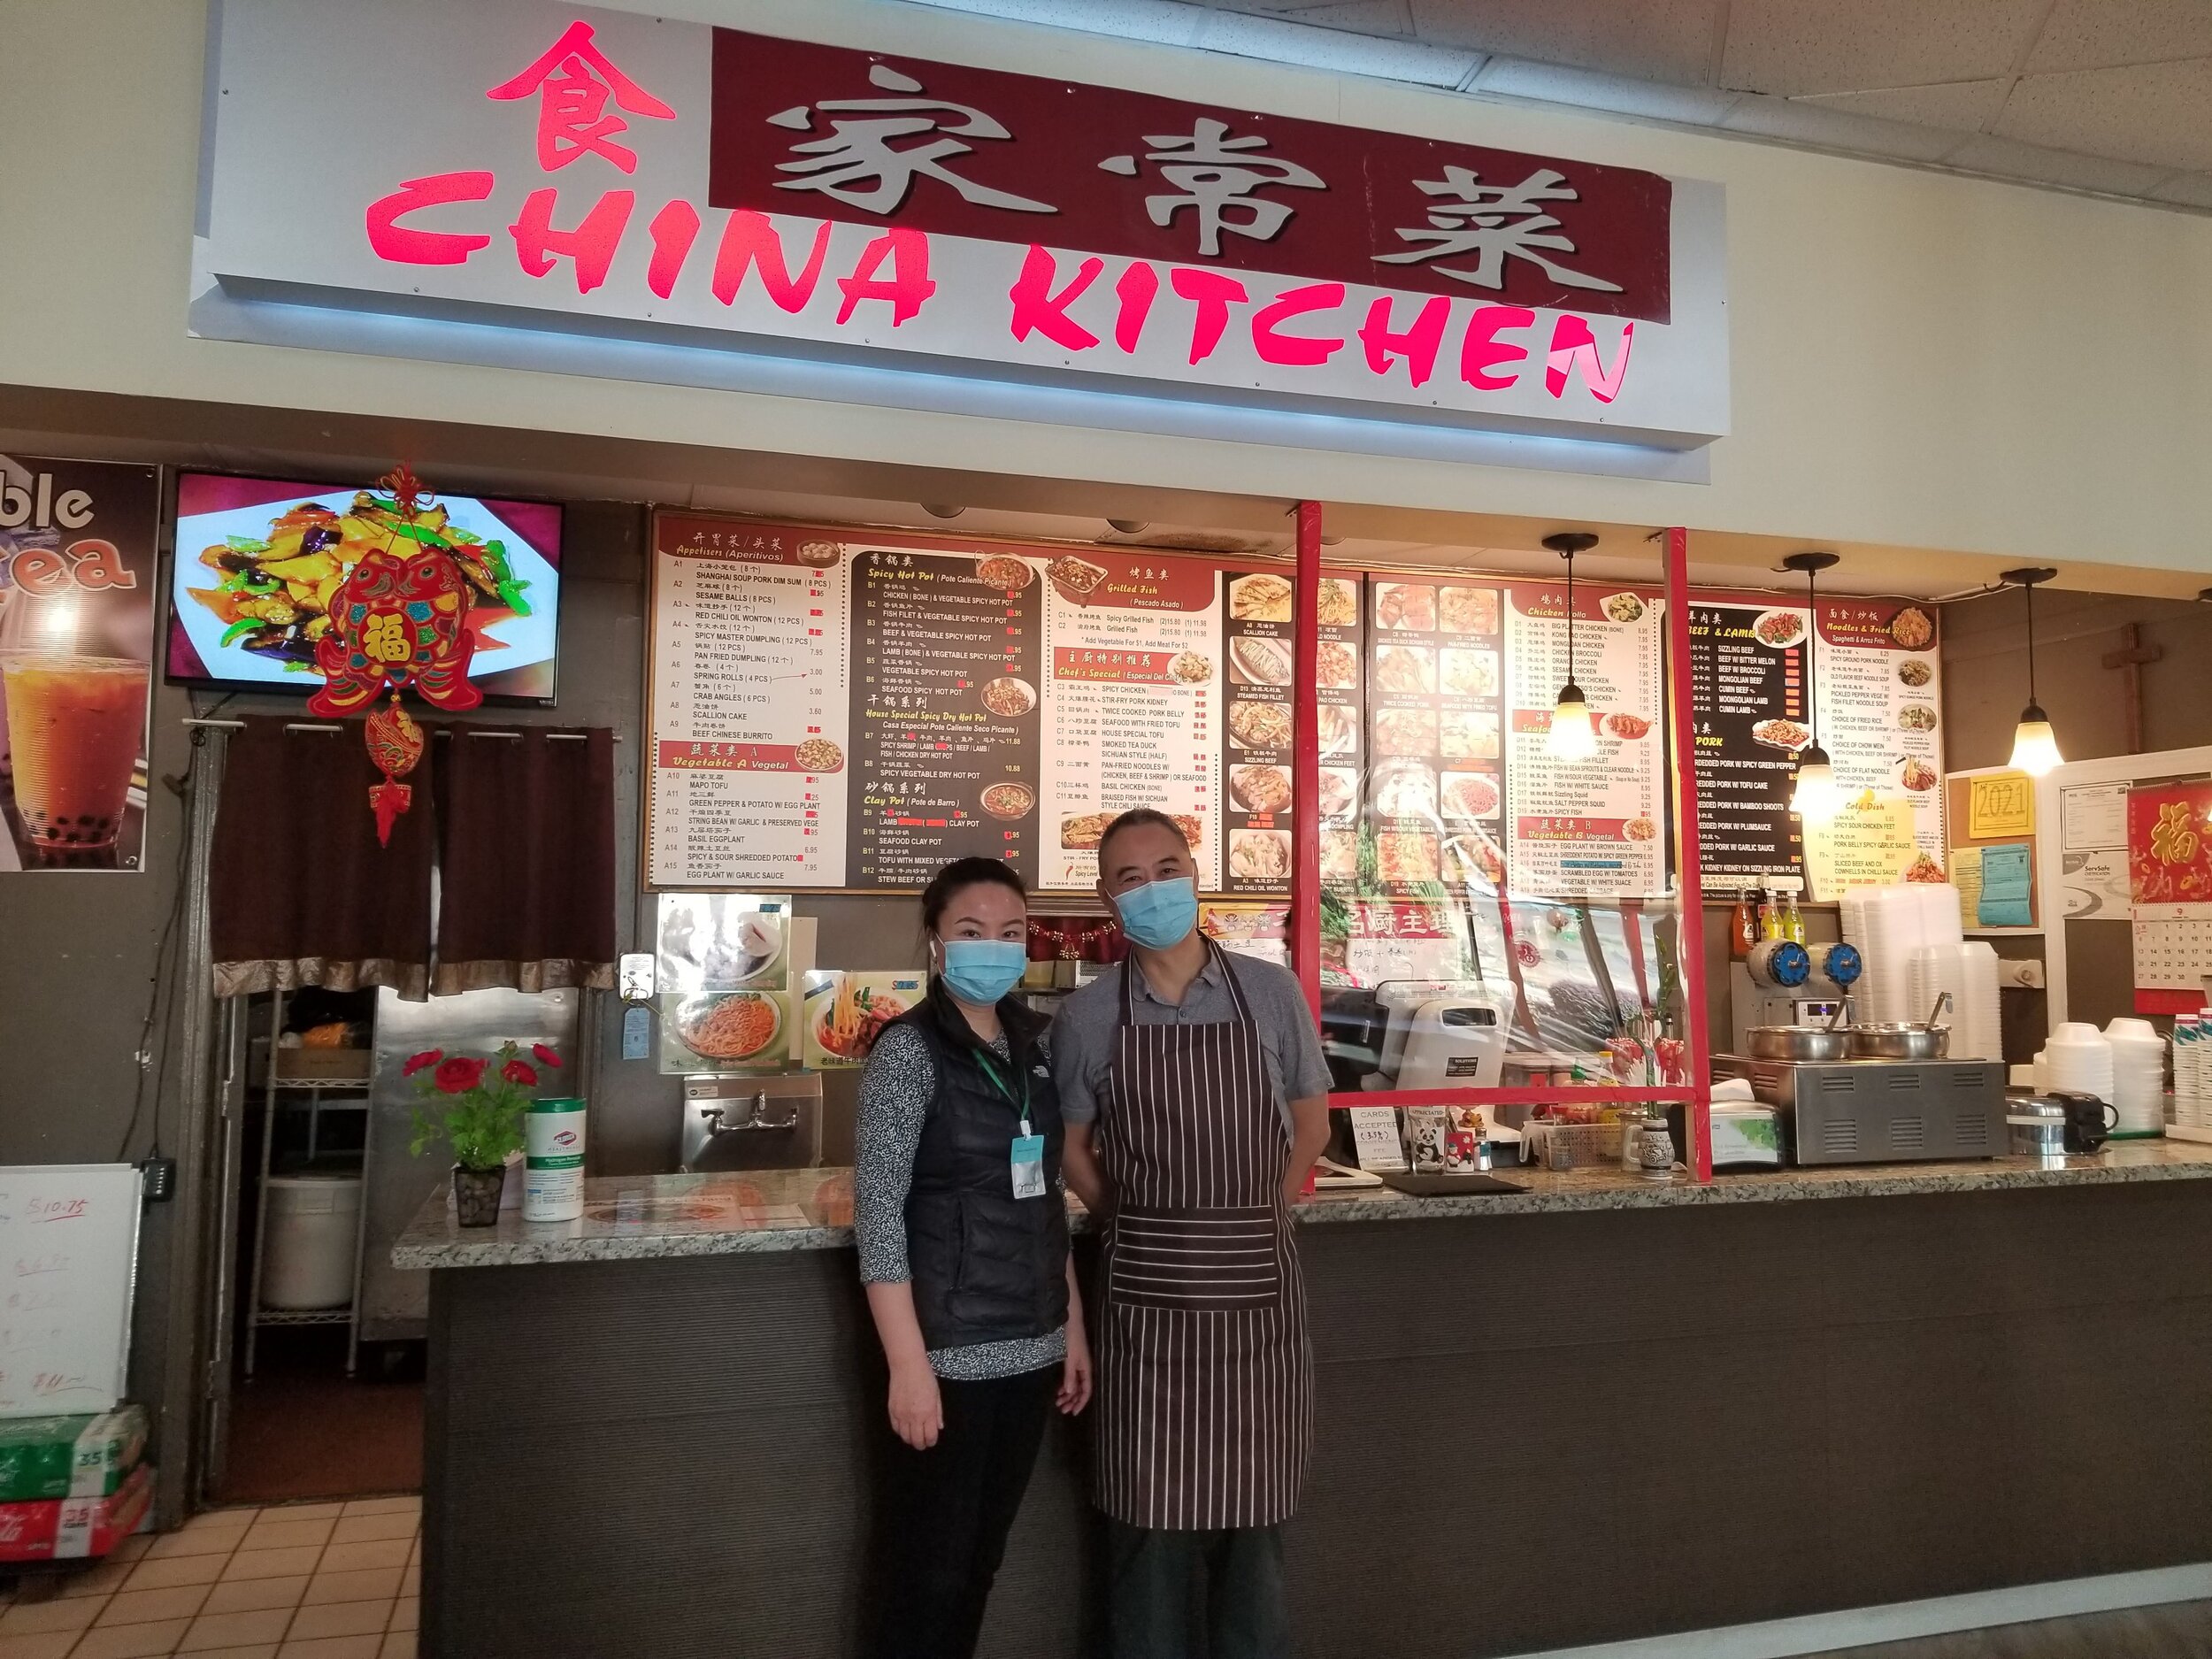 China Kitchen Owners.jpg